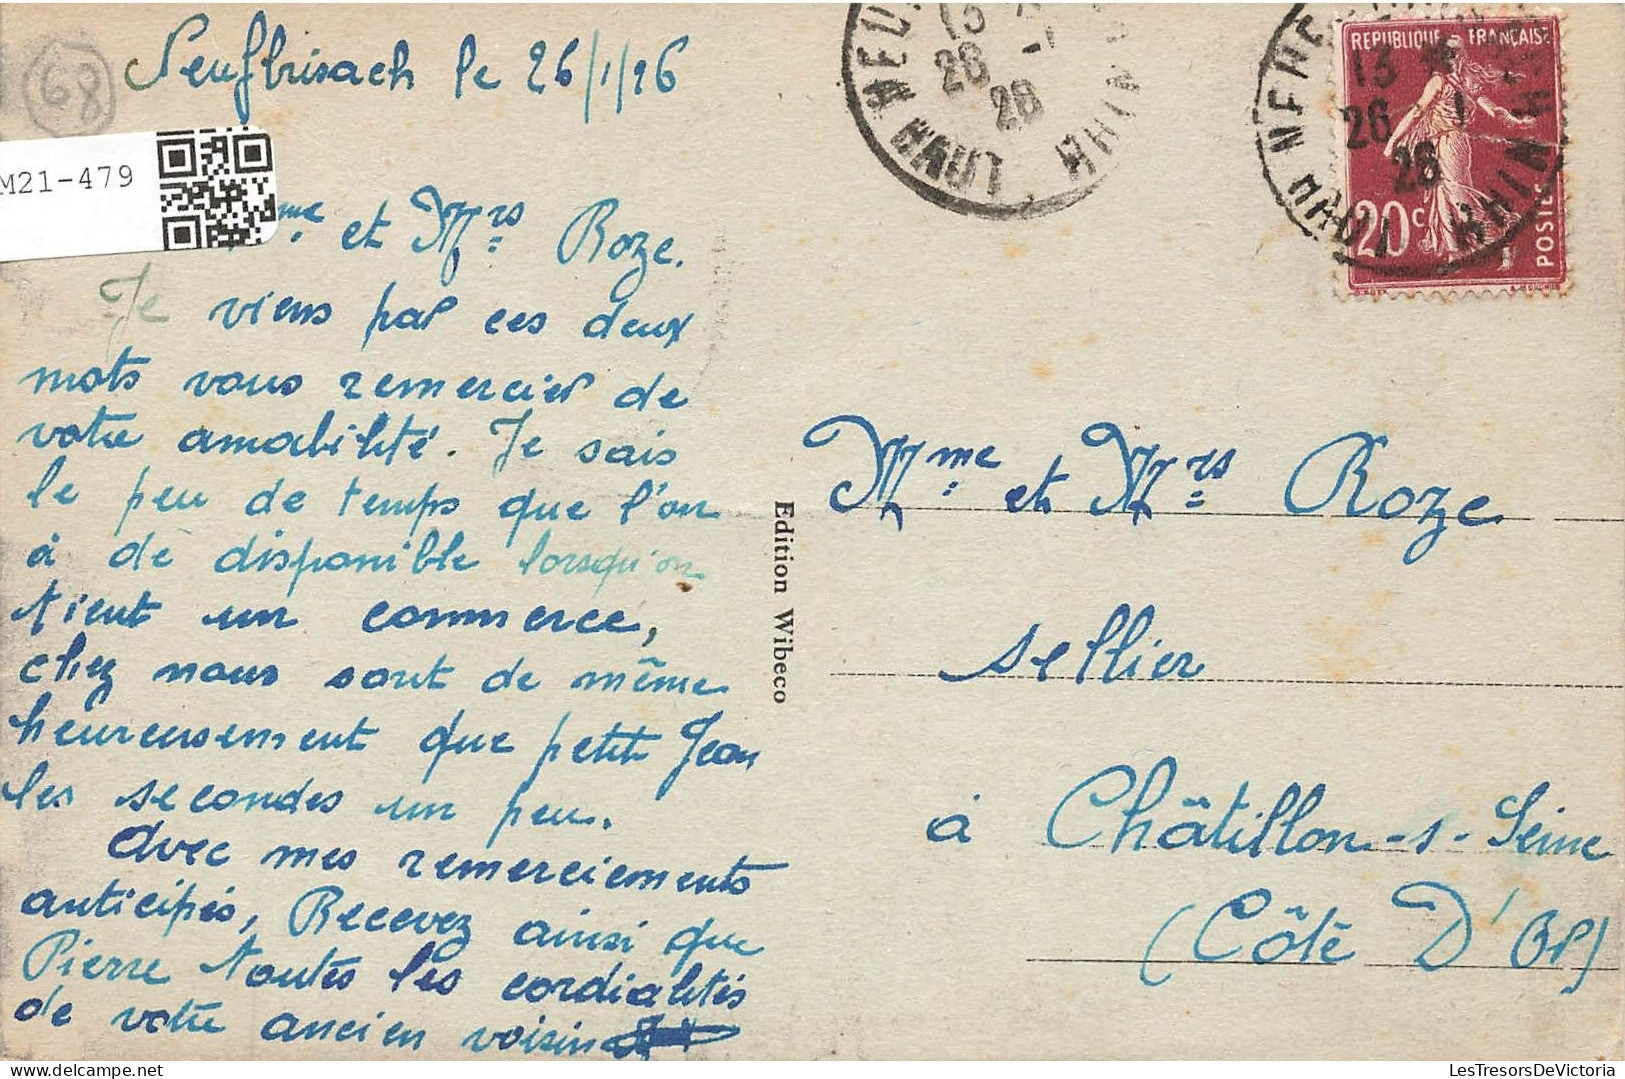 FRANCE - Neuf Brisach - Caserne Abatucci - Colorisé - Carte Postale Ancienne - Neuf Brisach